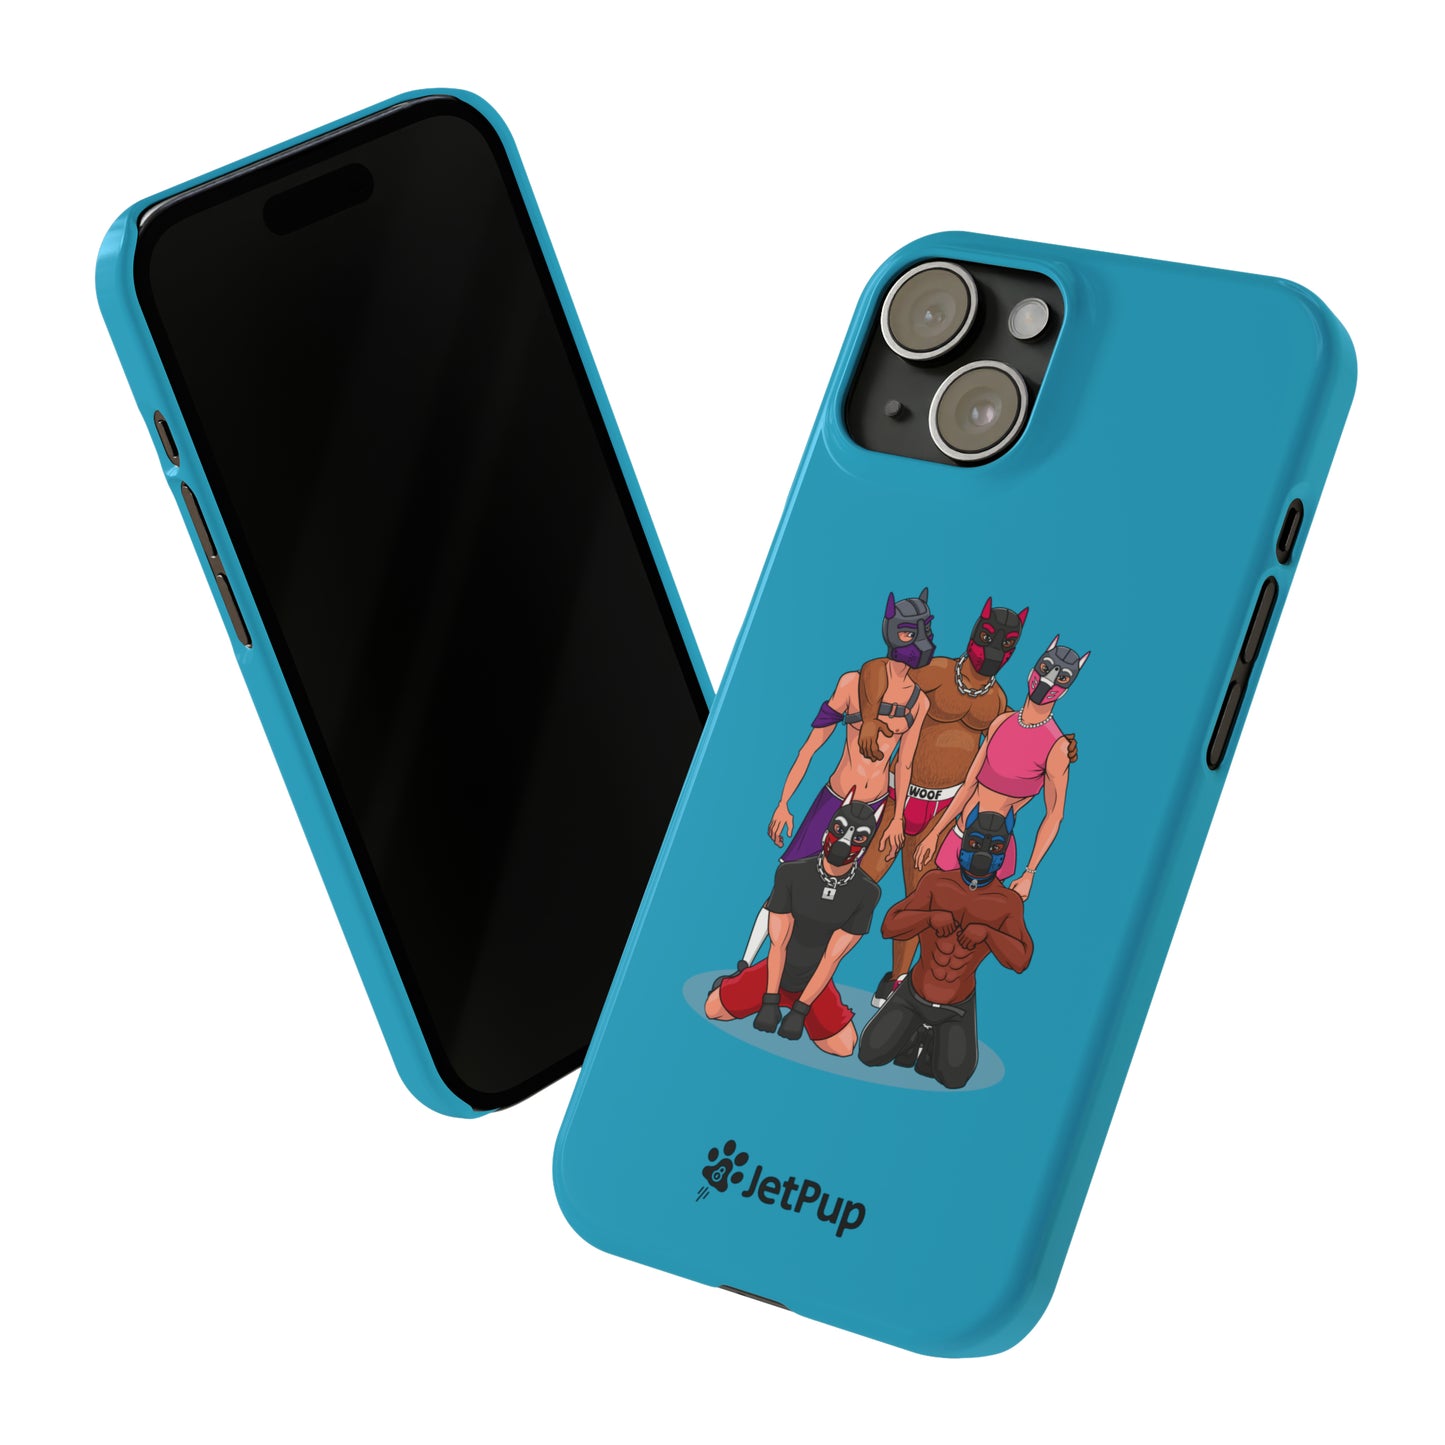 JetPack Slim iPhone Cases - Turquoise